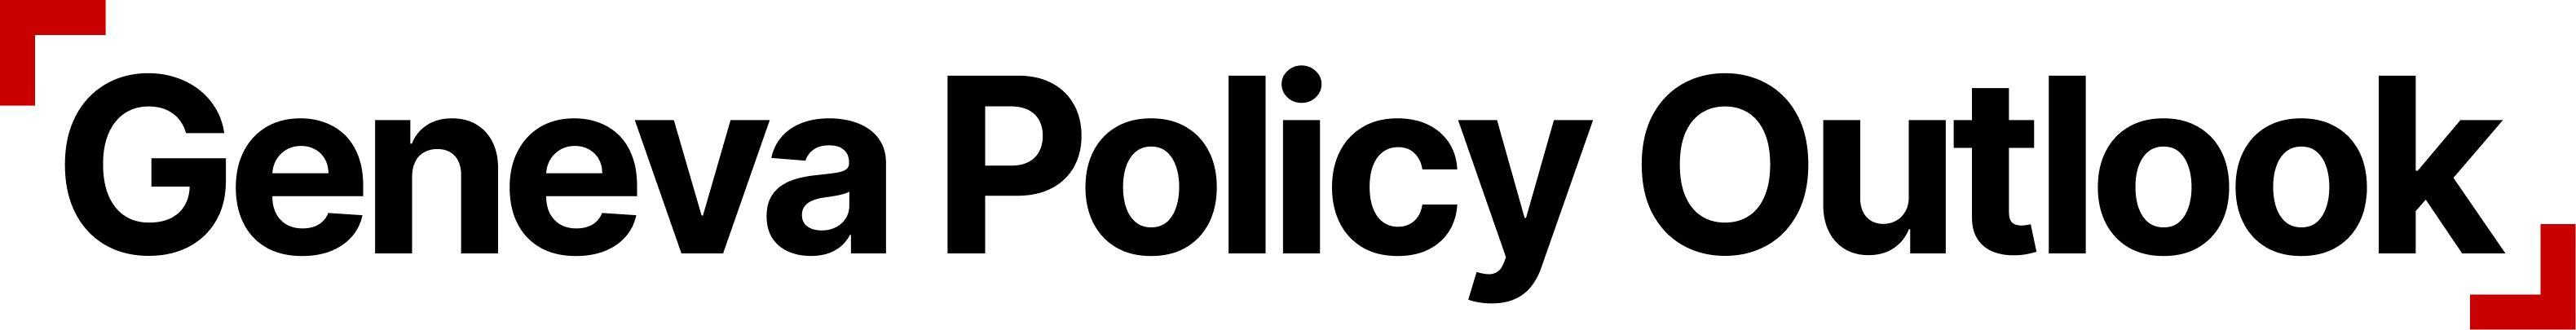 GPO logo